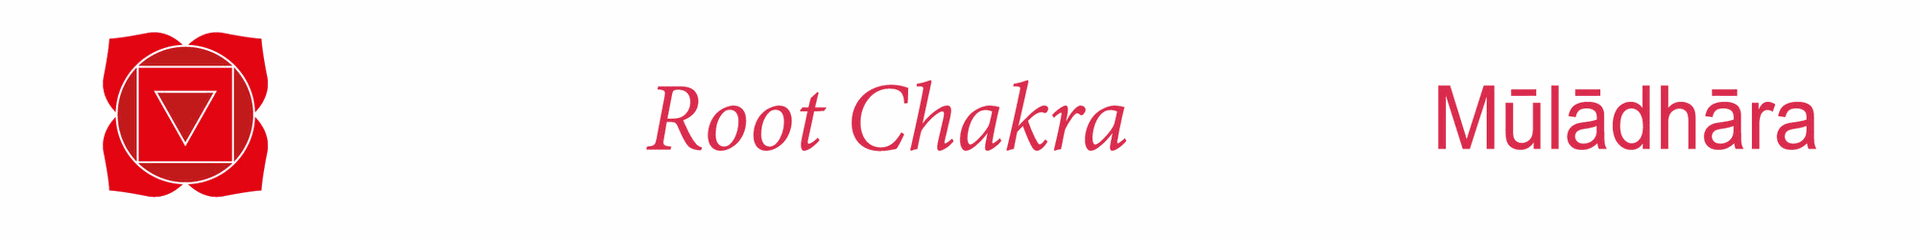 root chakra image